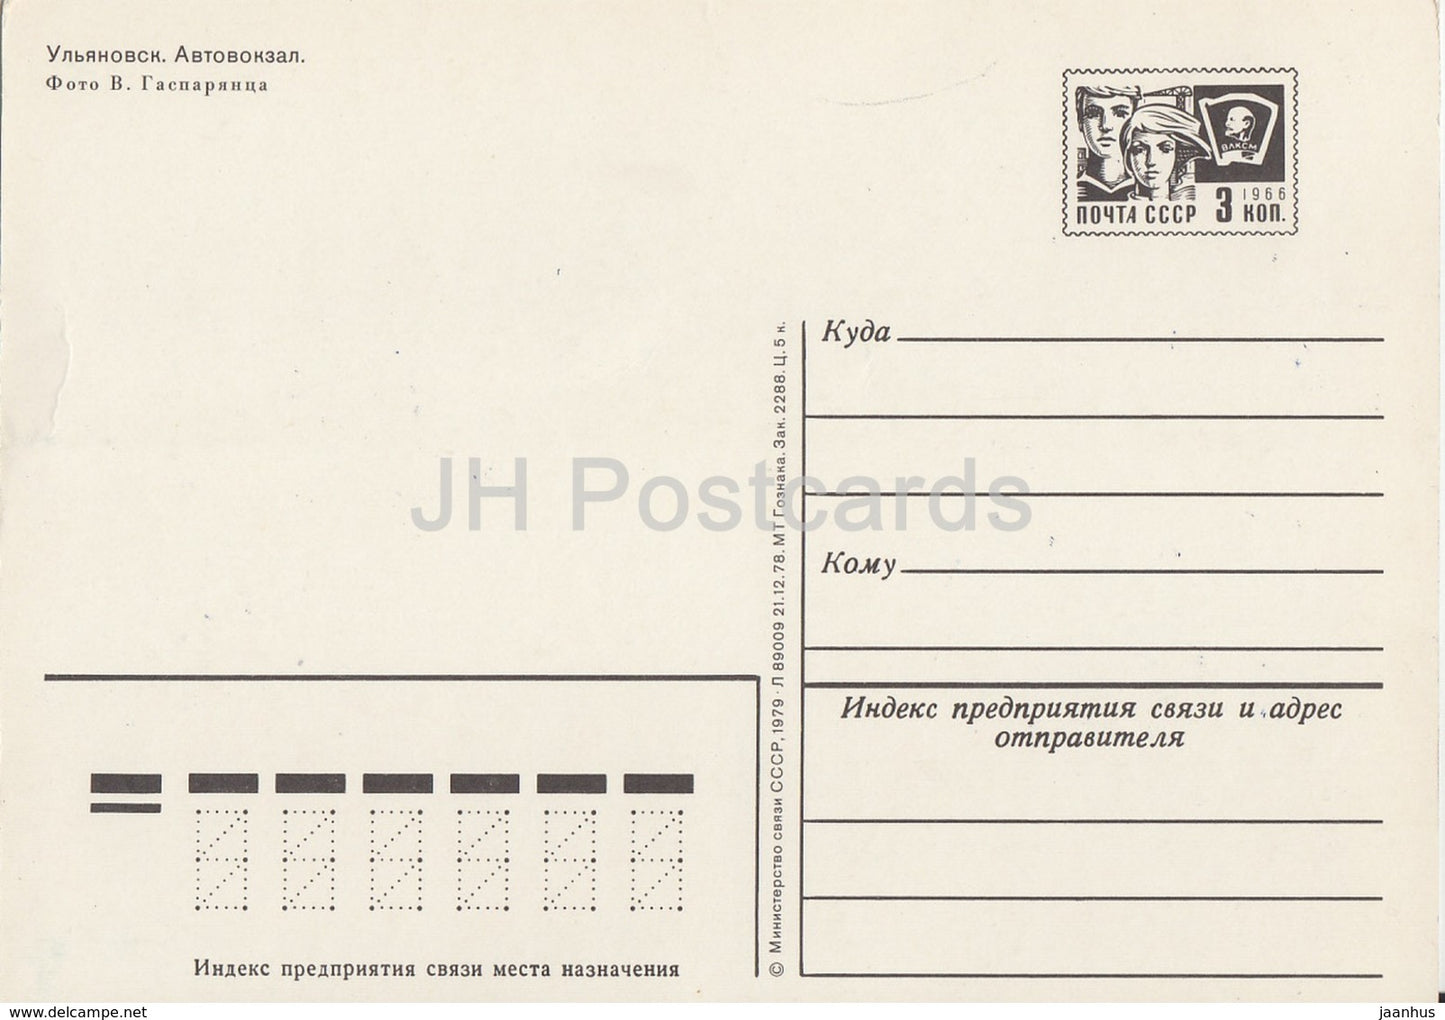 Oulianovsk - Gare routière - voiture Volga - entier postal - 1979 - Russie URSS - inutilisé